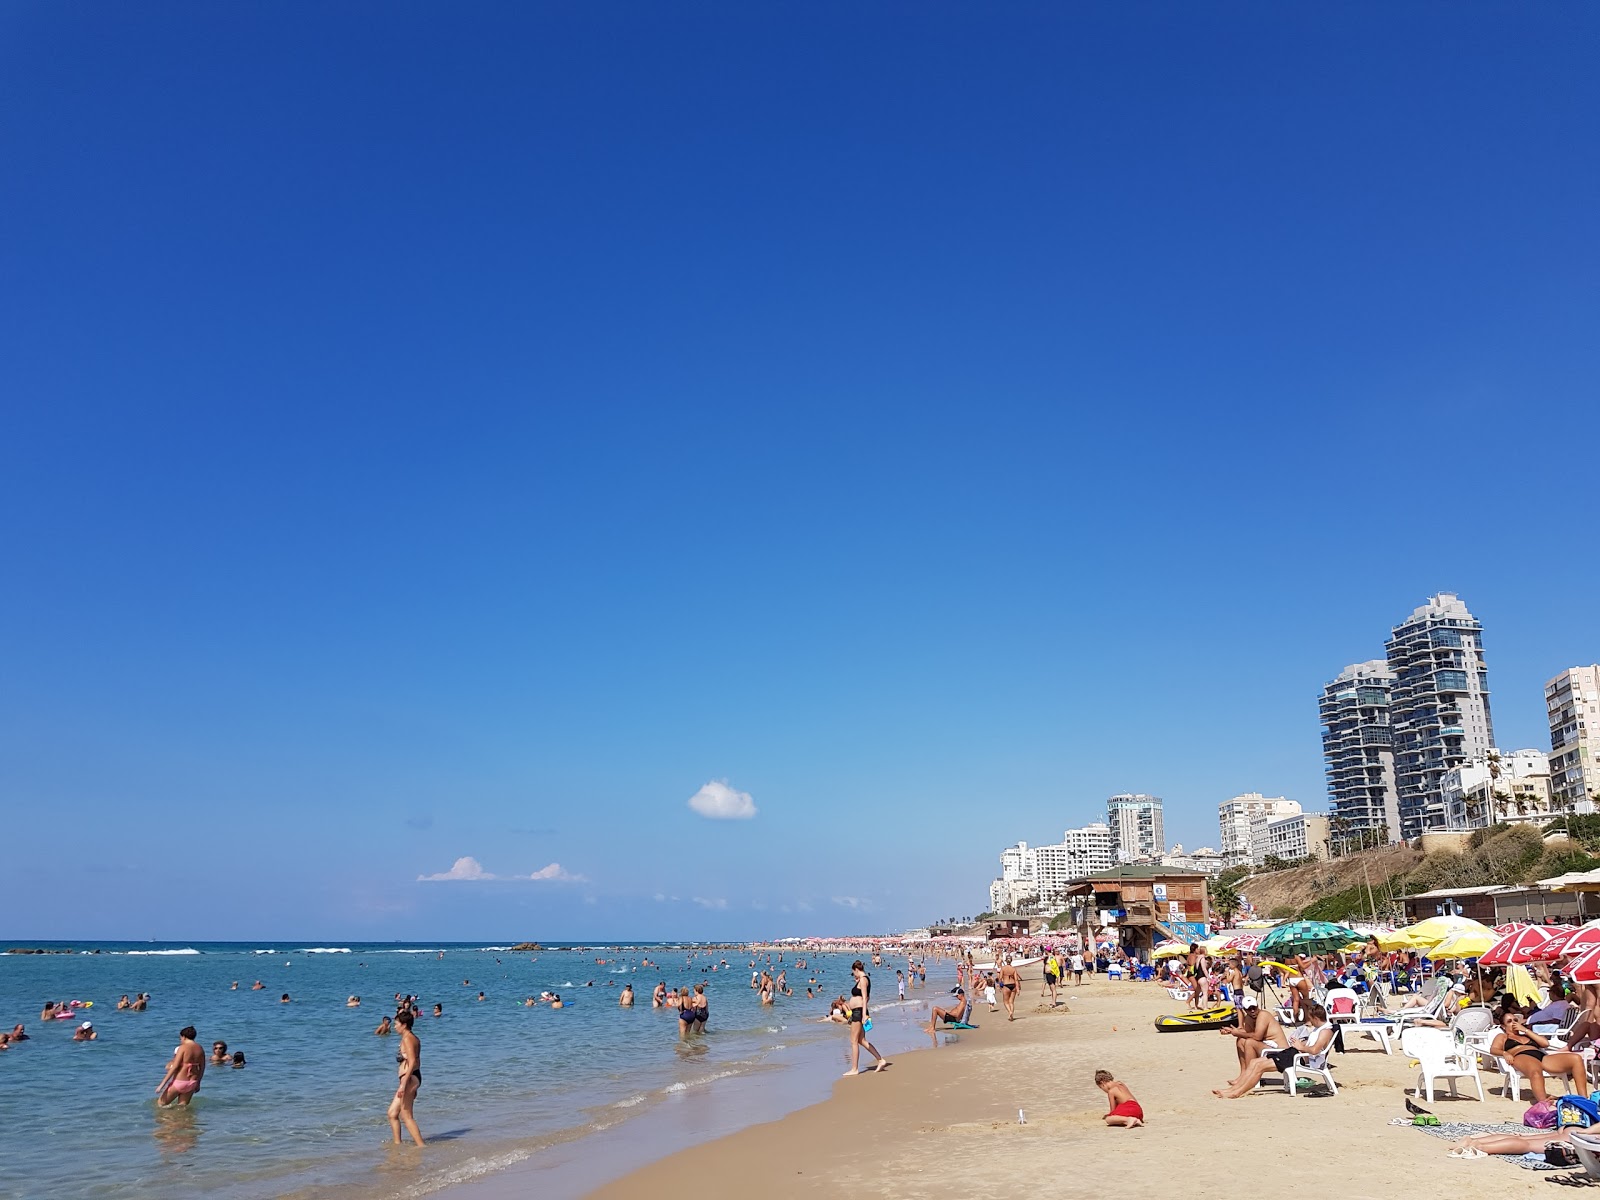 Fotografie cu Yerushalayim beach și așezarea